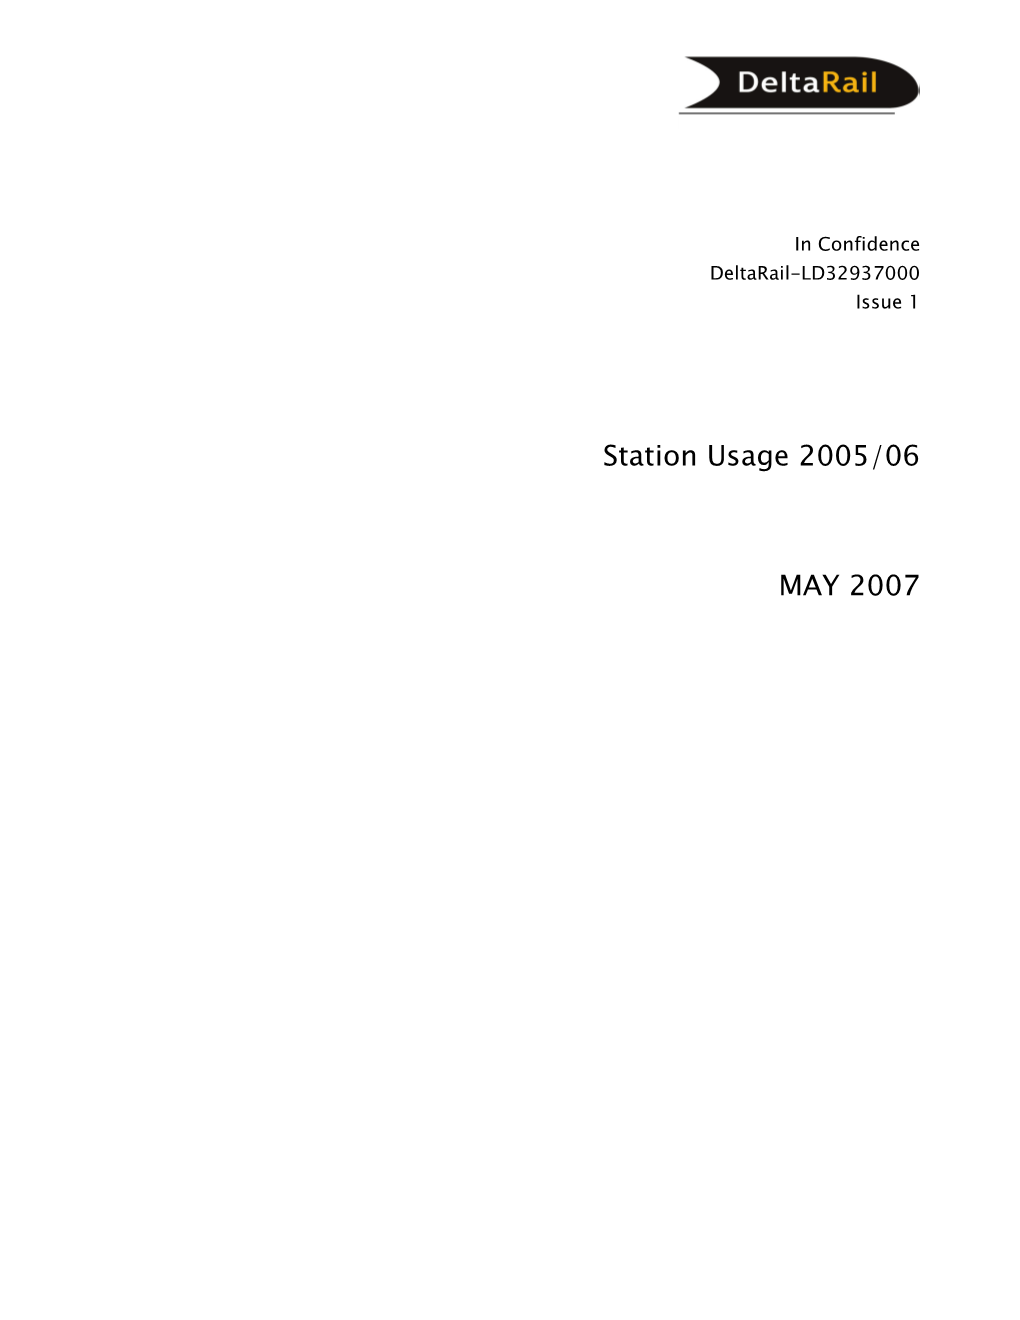 Station Usage 2005/06 MAY 2007